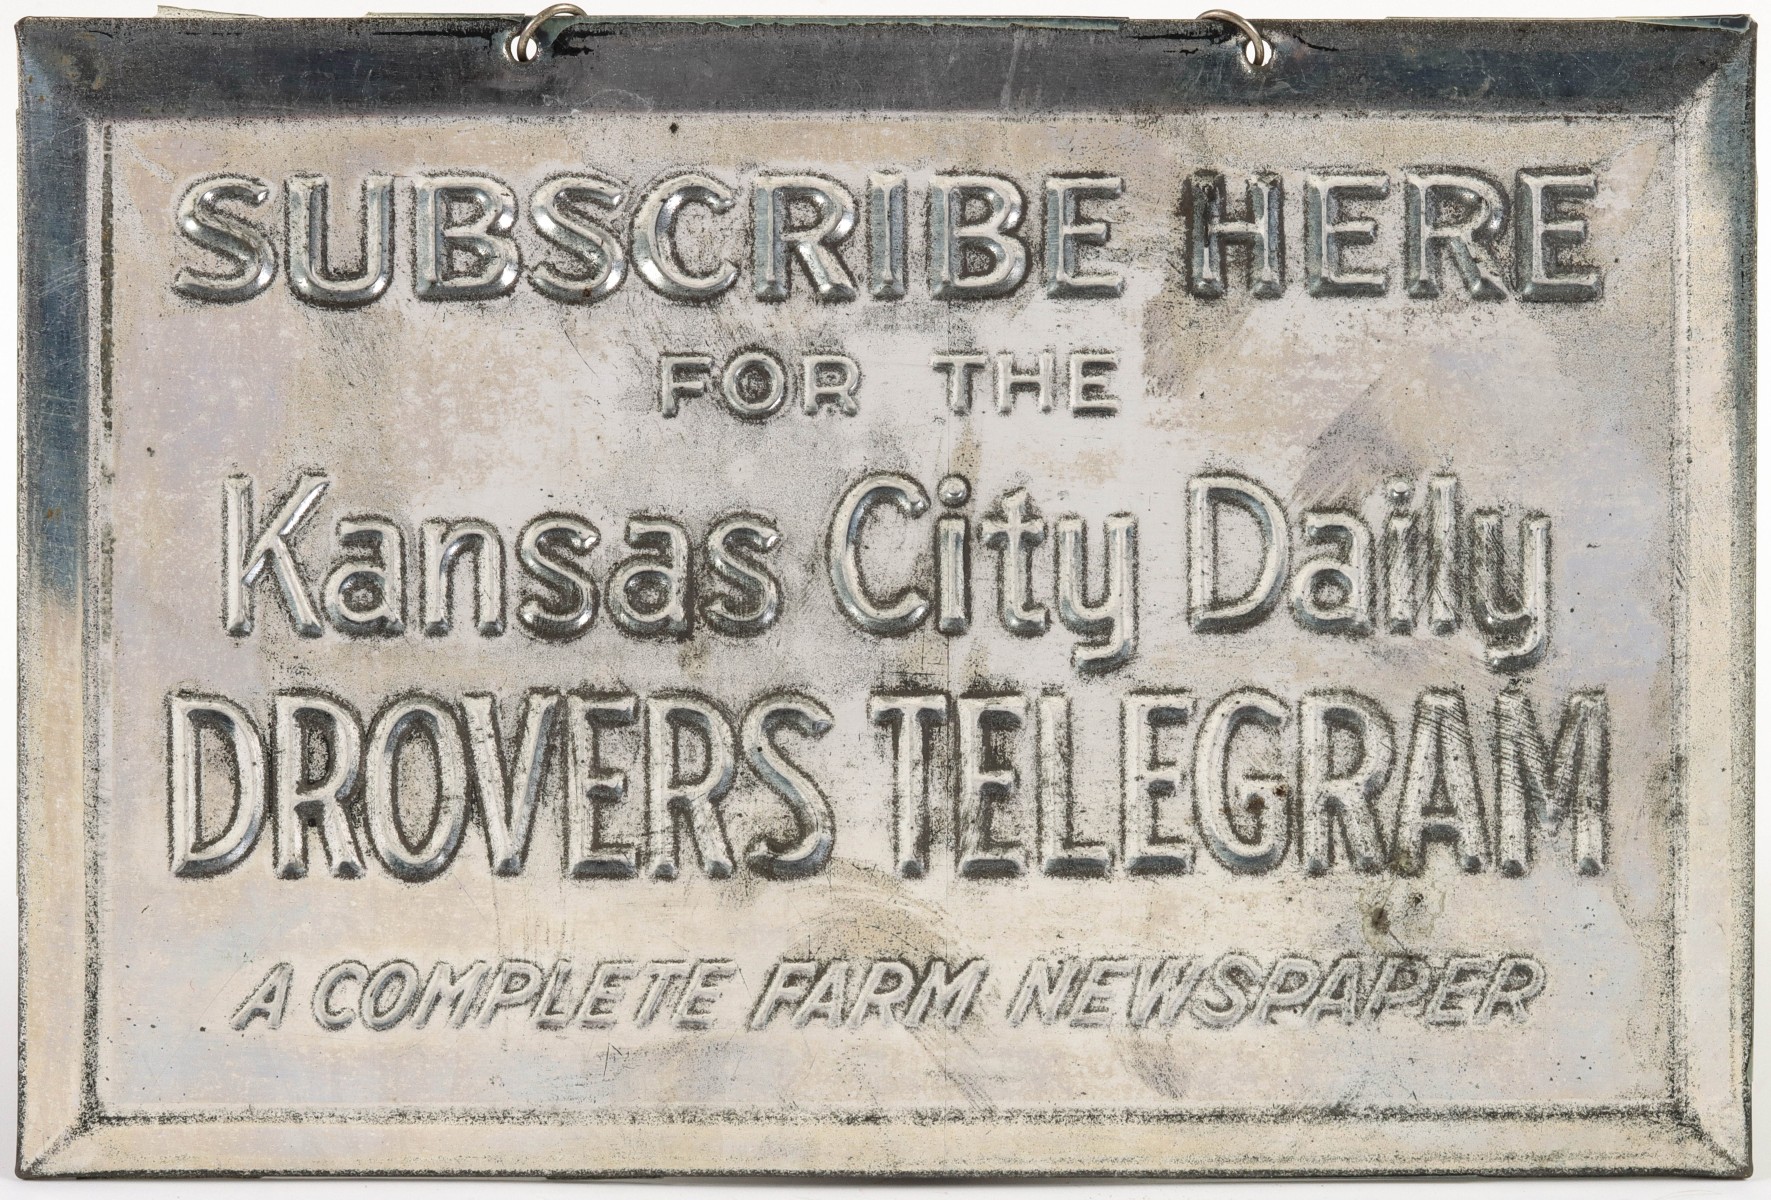 THE KANSAS CITY DAILY DROVERS TELEGRAM ADVERTISING SIGN